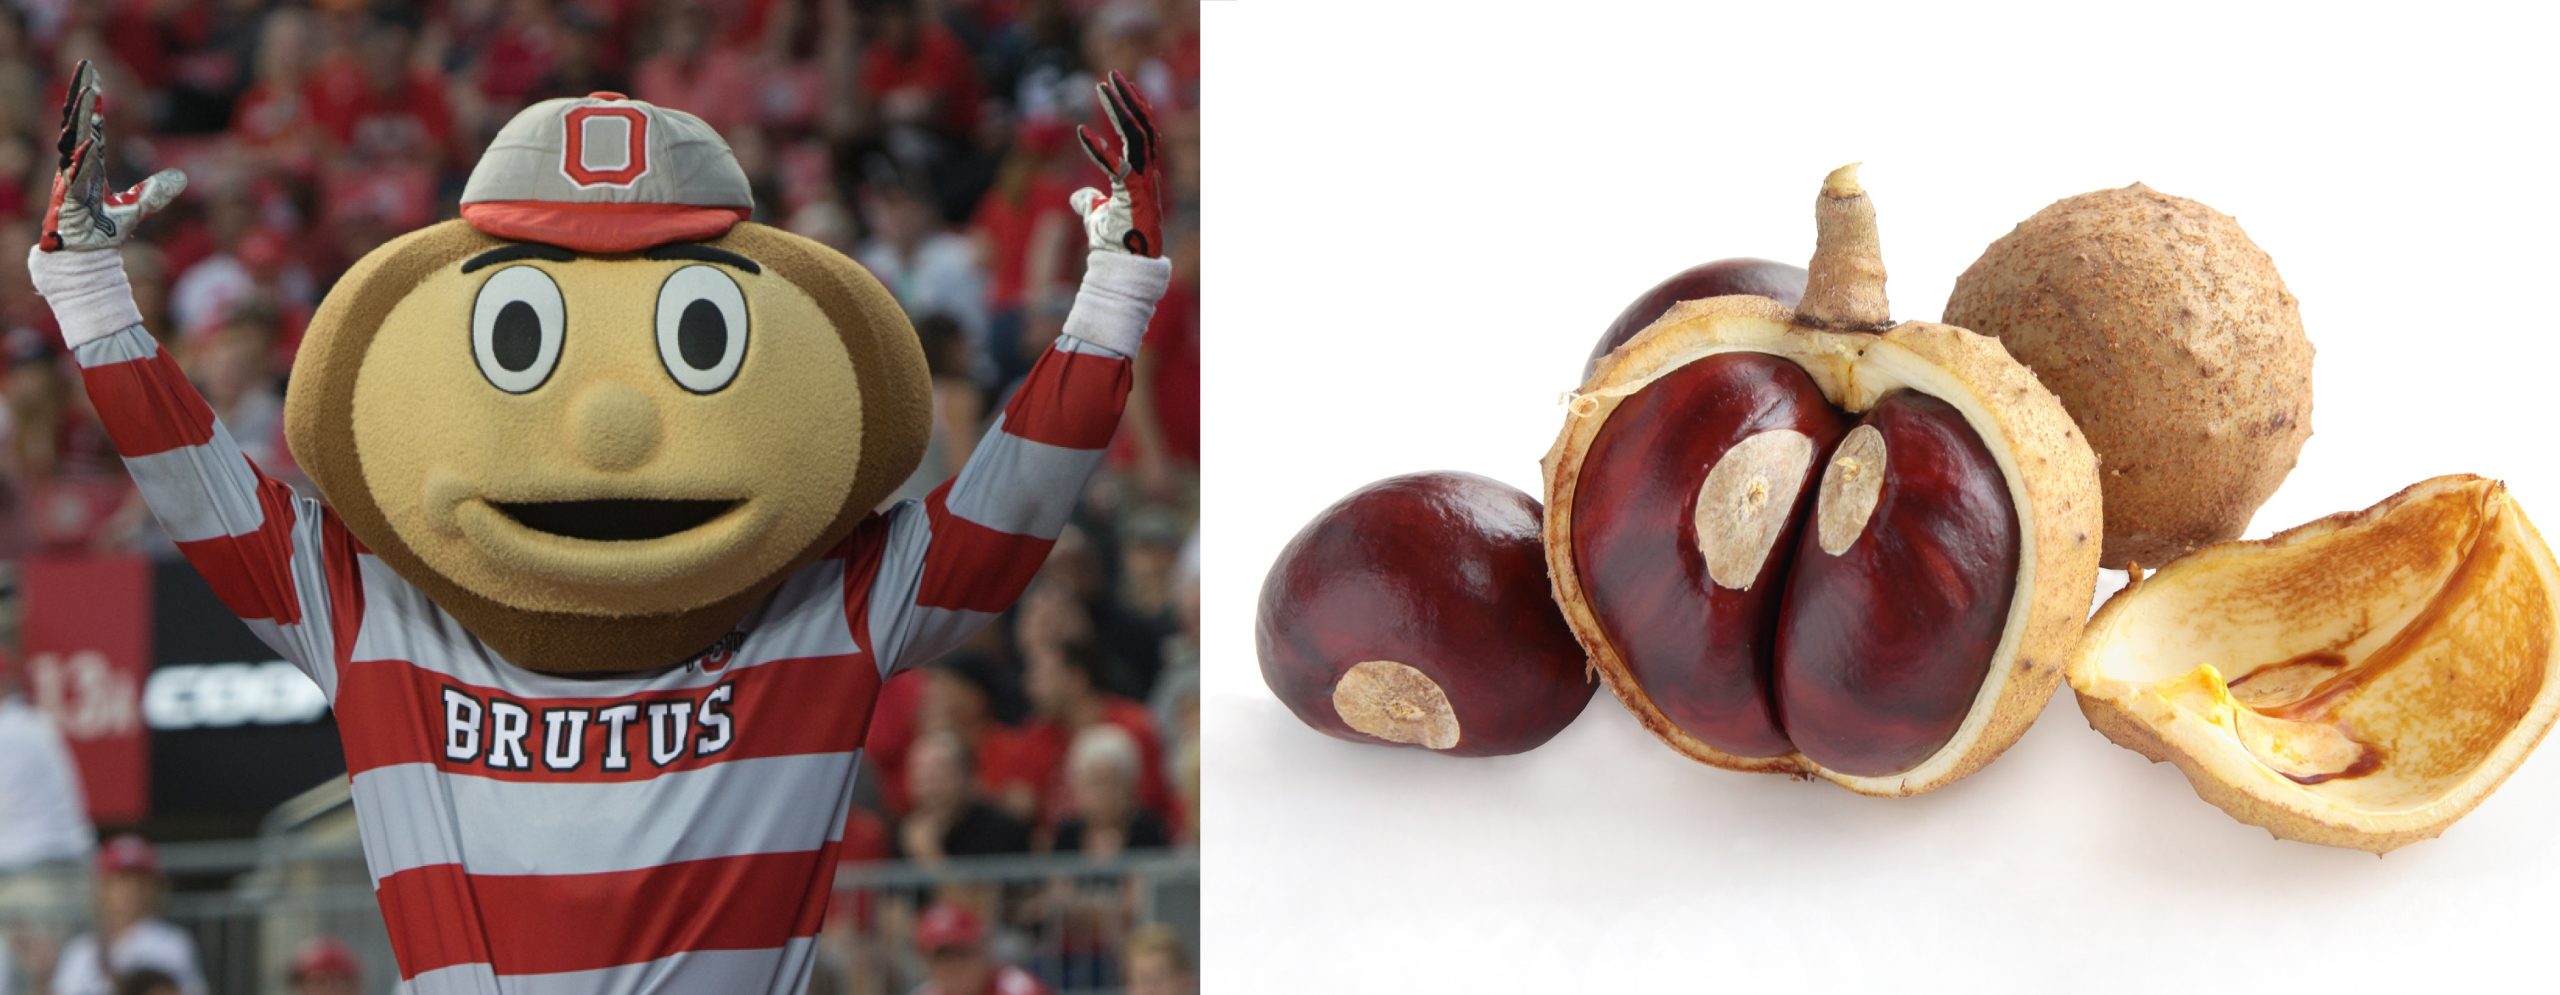 Brutus, the mascot of The Ohio State University Buckeyes. Right: The fruit of the Ohio buckeye (Aesculus glabra).